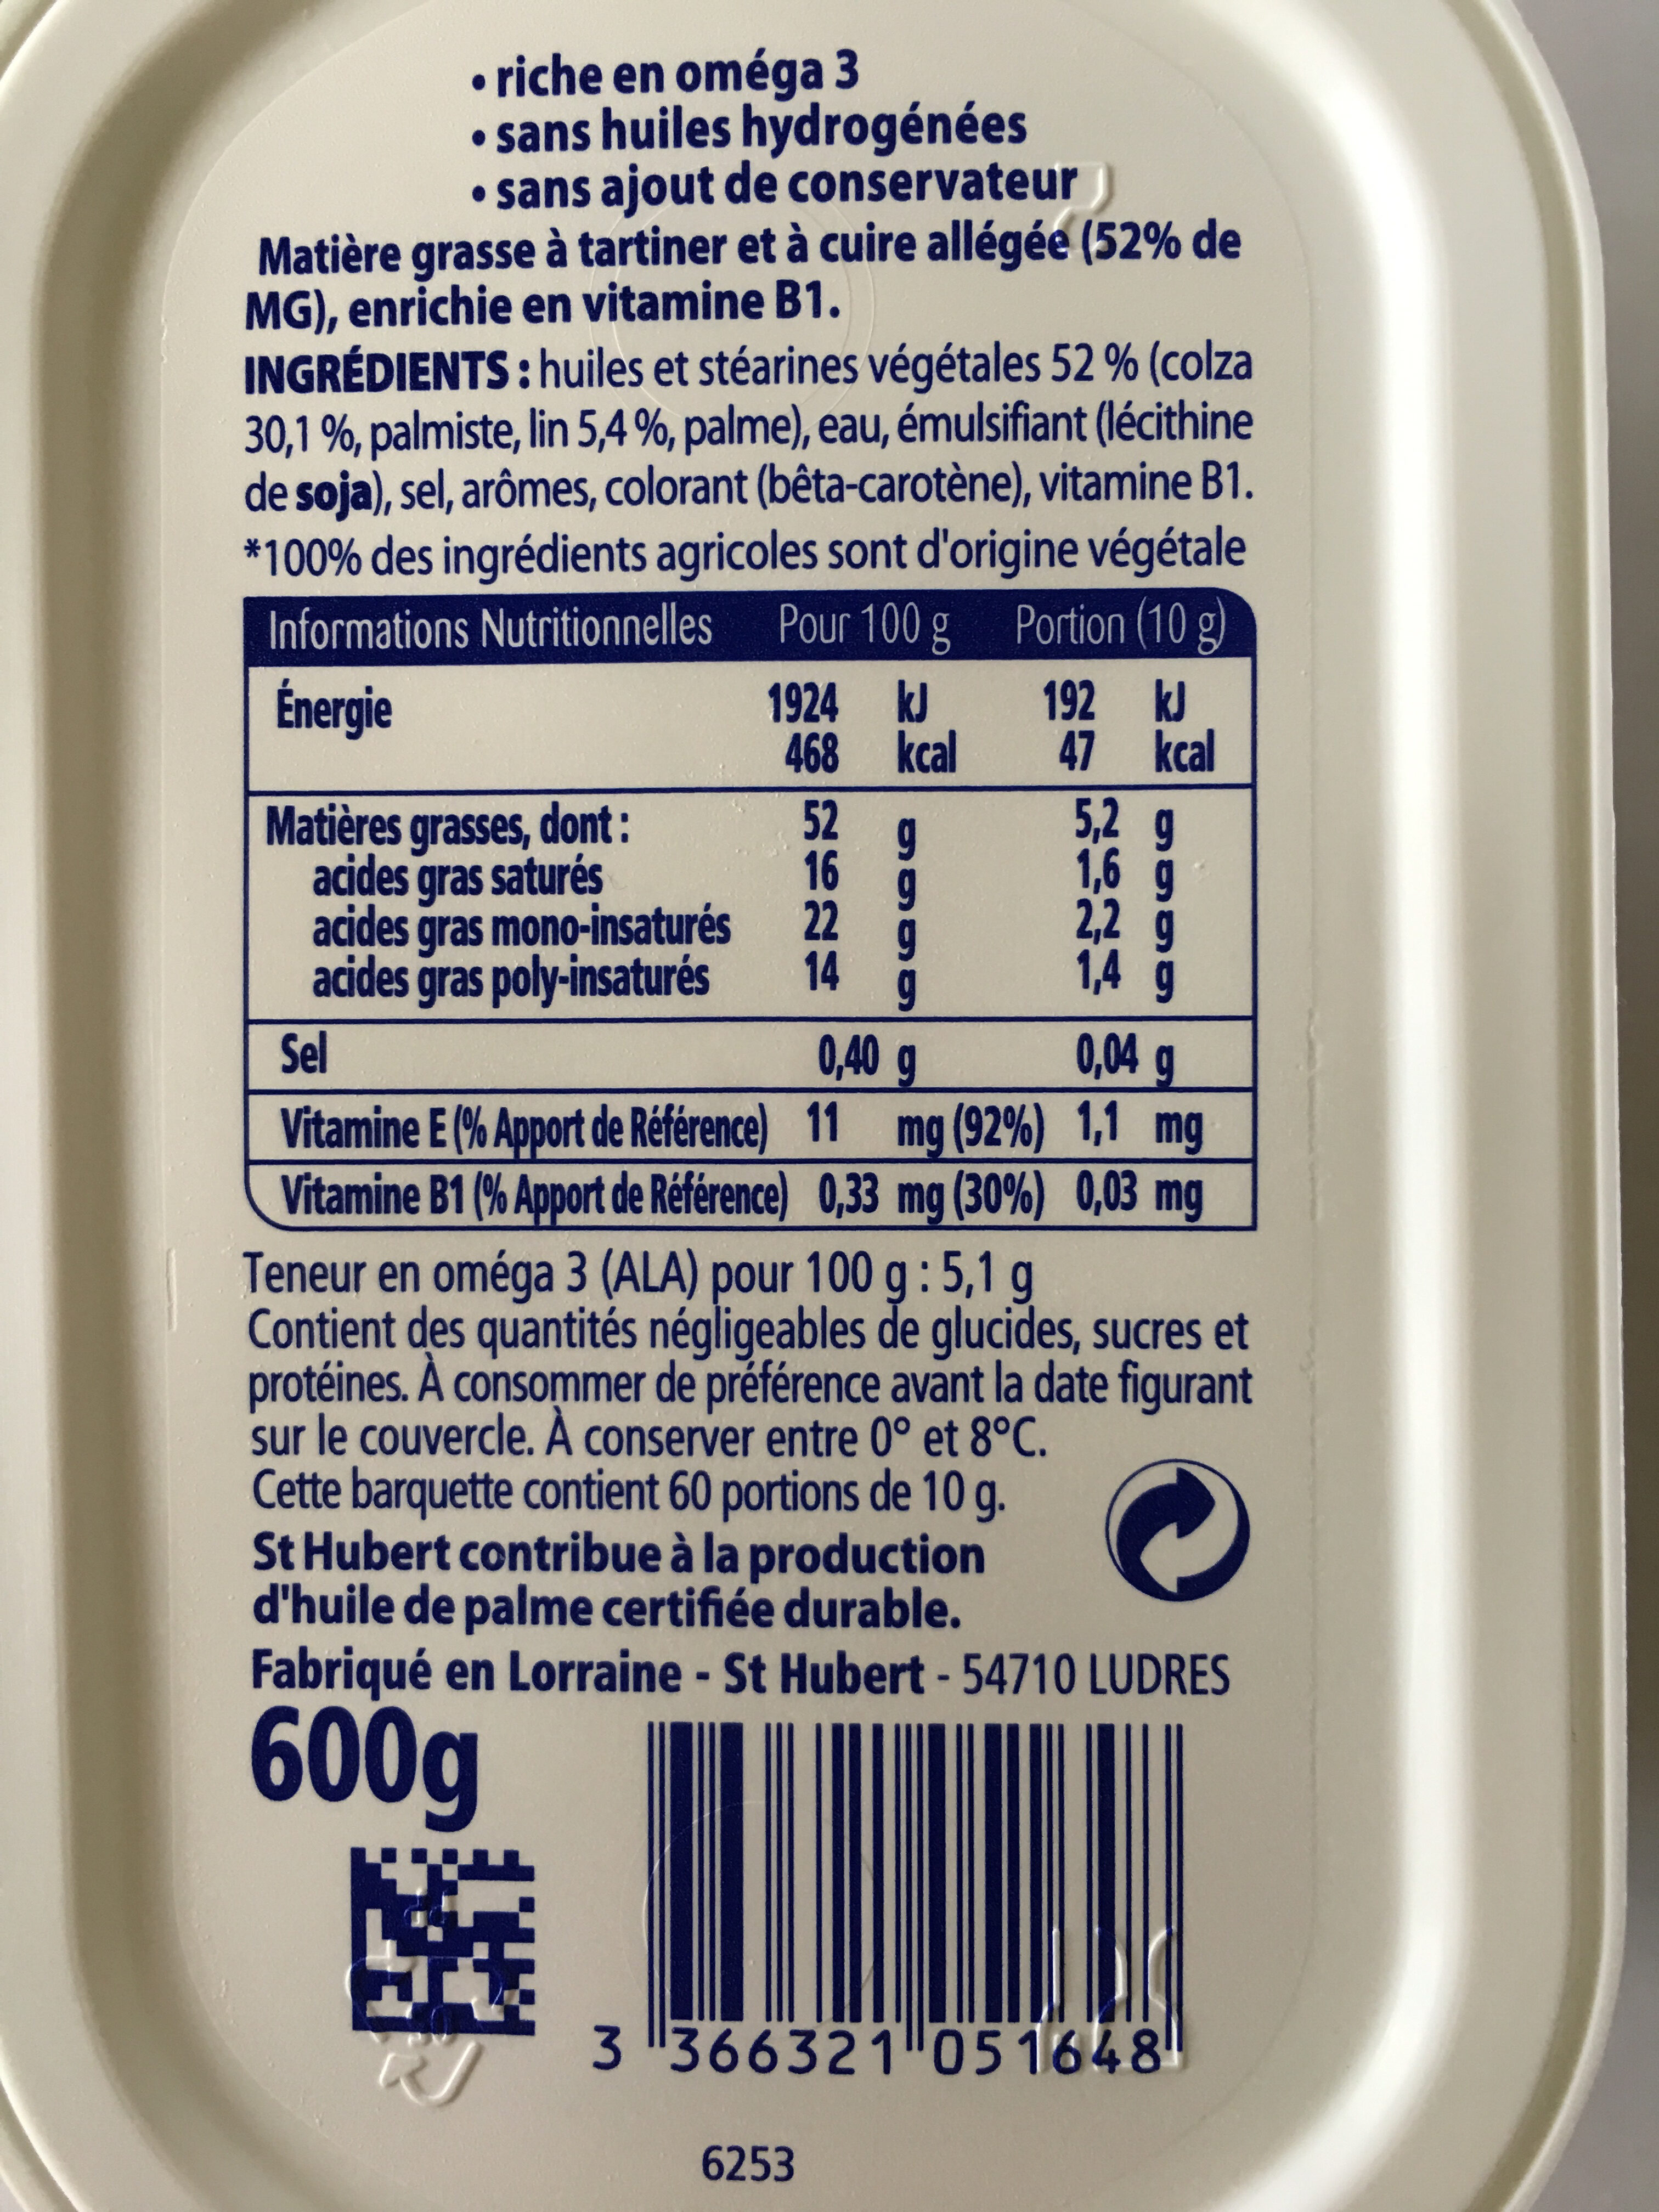 St hubert omega 3 600 g doux format special - Información nutricional - fr